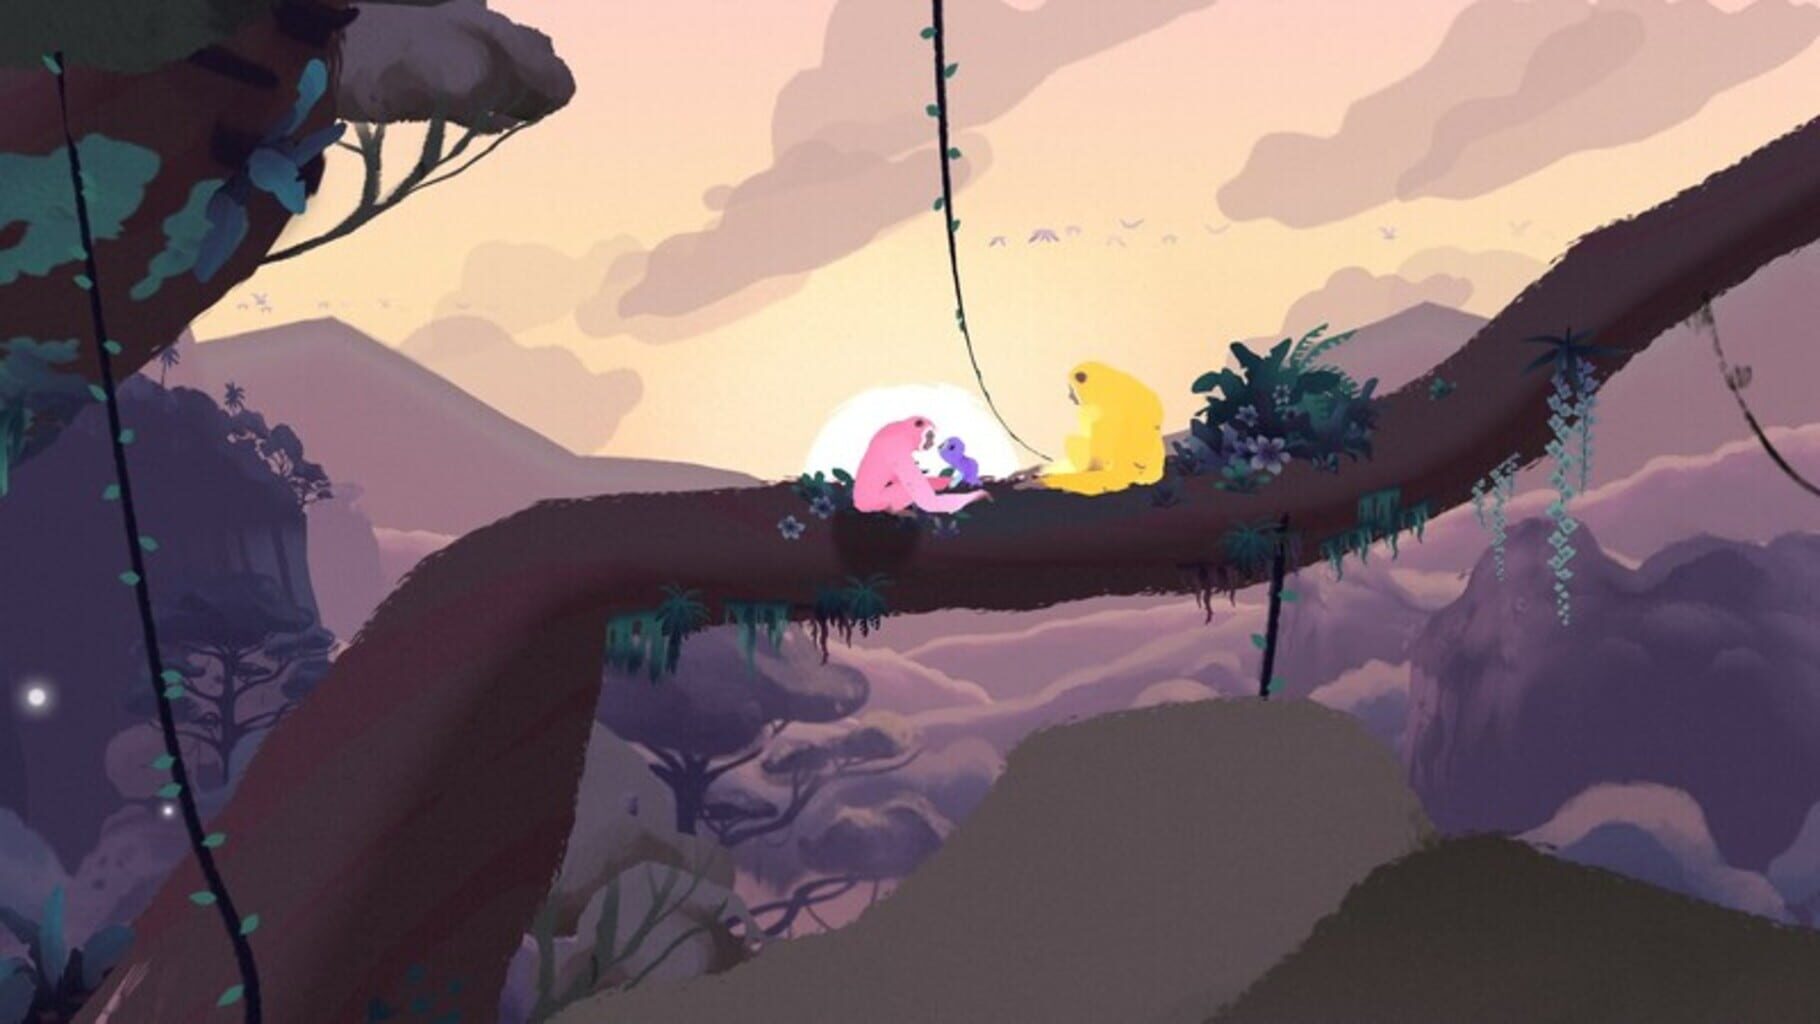 Captura de pantalla - Gibbon: Beyond the Trees